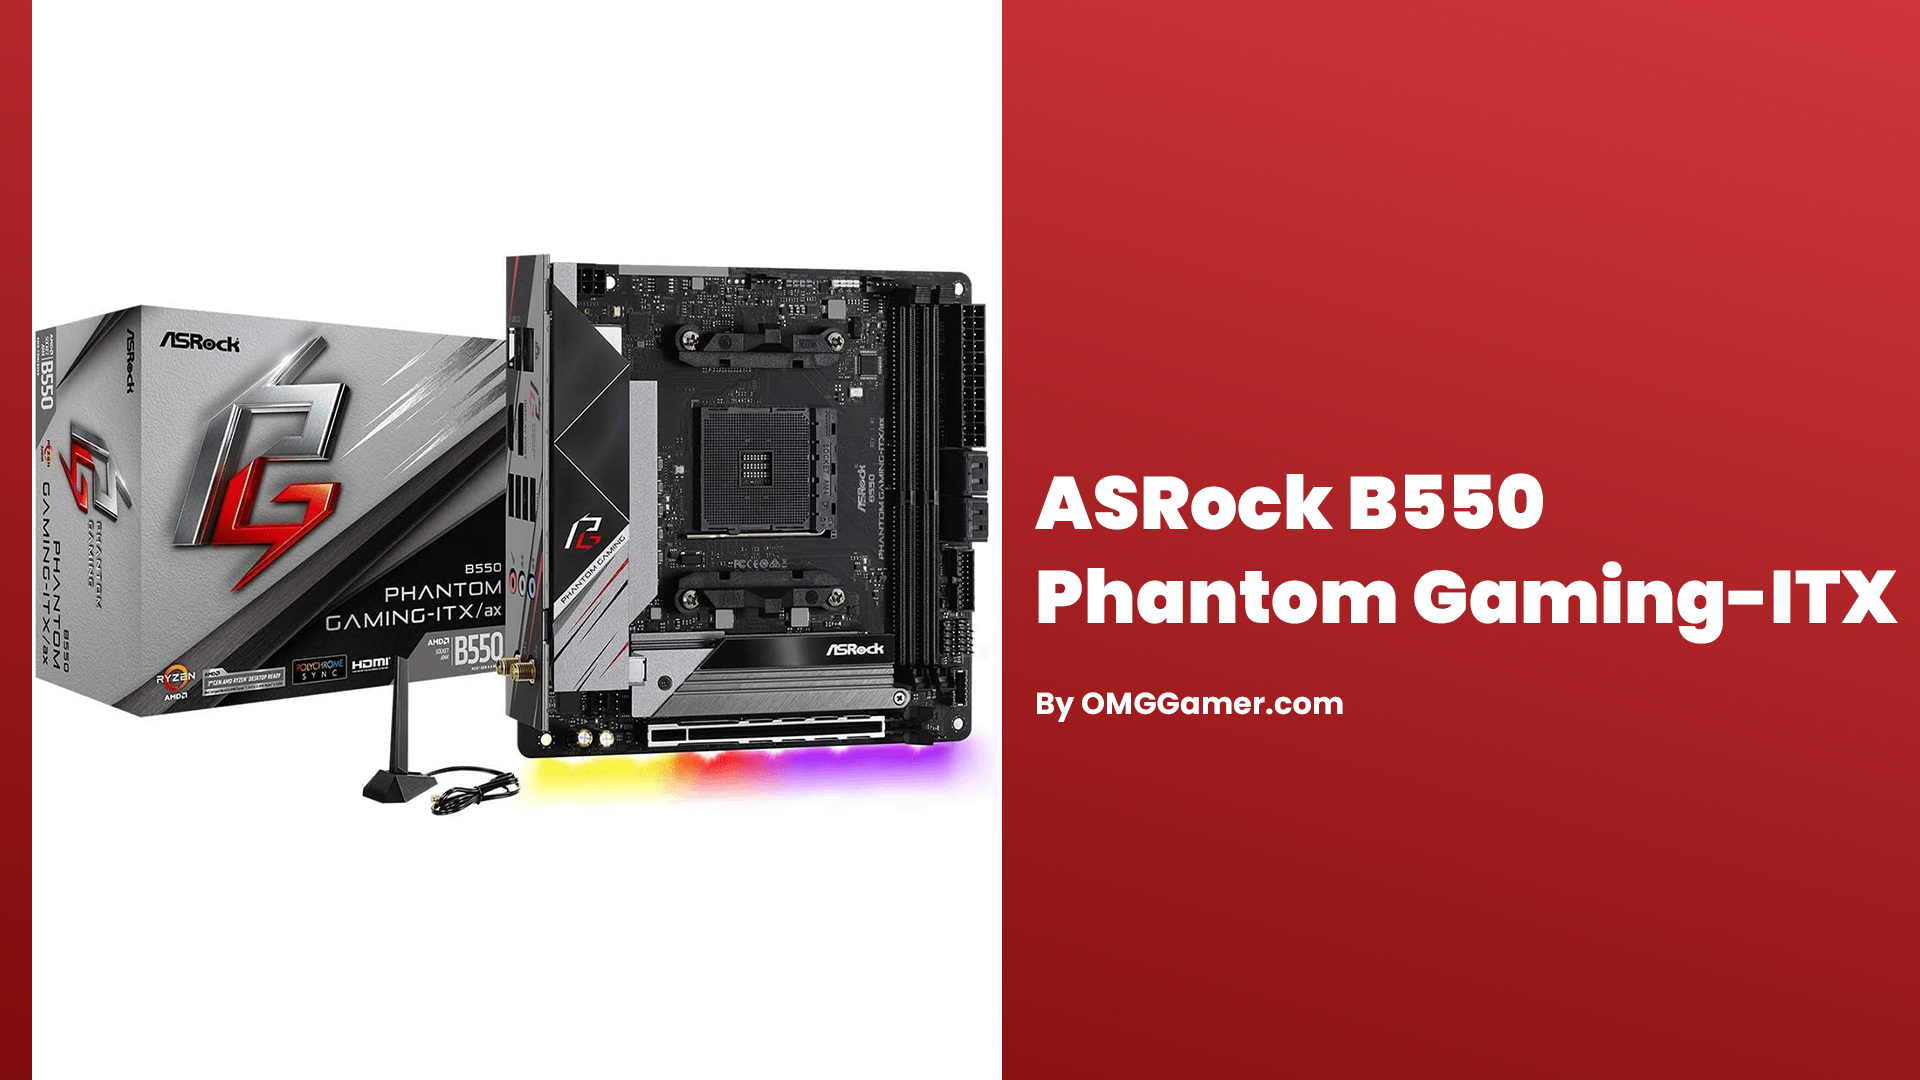 ASRock B550 Phantom Gaming-ITXi: Best Motherboard for Ryzen 9 5900x